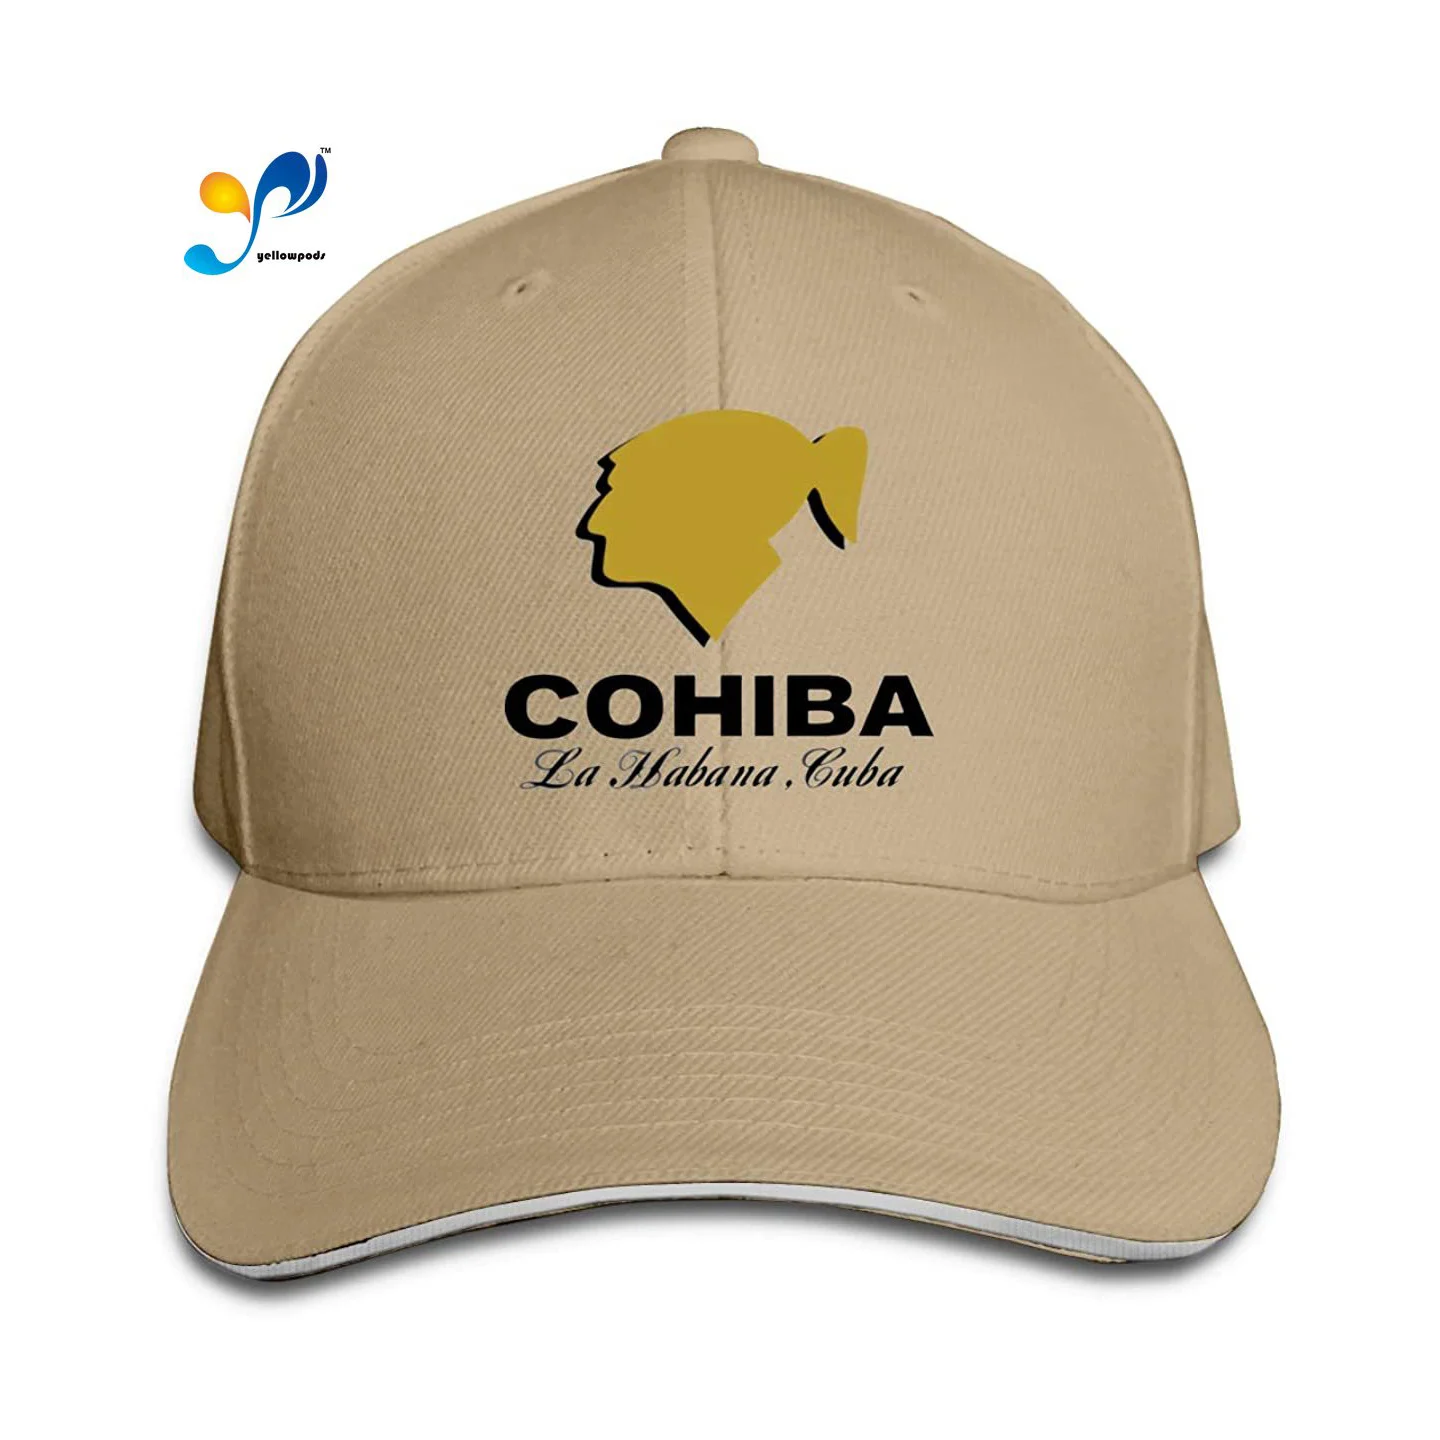 

Cohiba Cigar Hip Hop Golf Trucker Adjustable Peaked Sandwich Hat Black Unisex Casquette White Moto Gp Baseball Cap